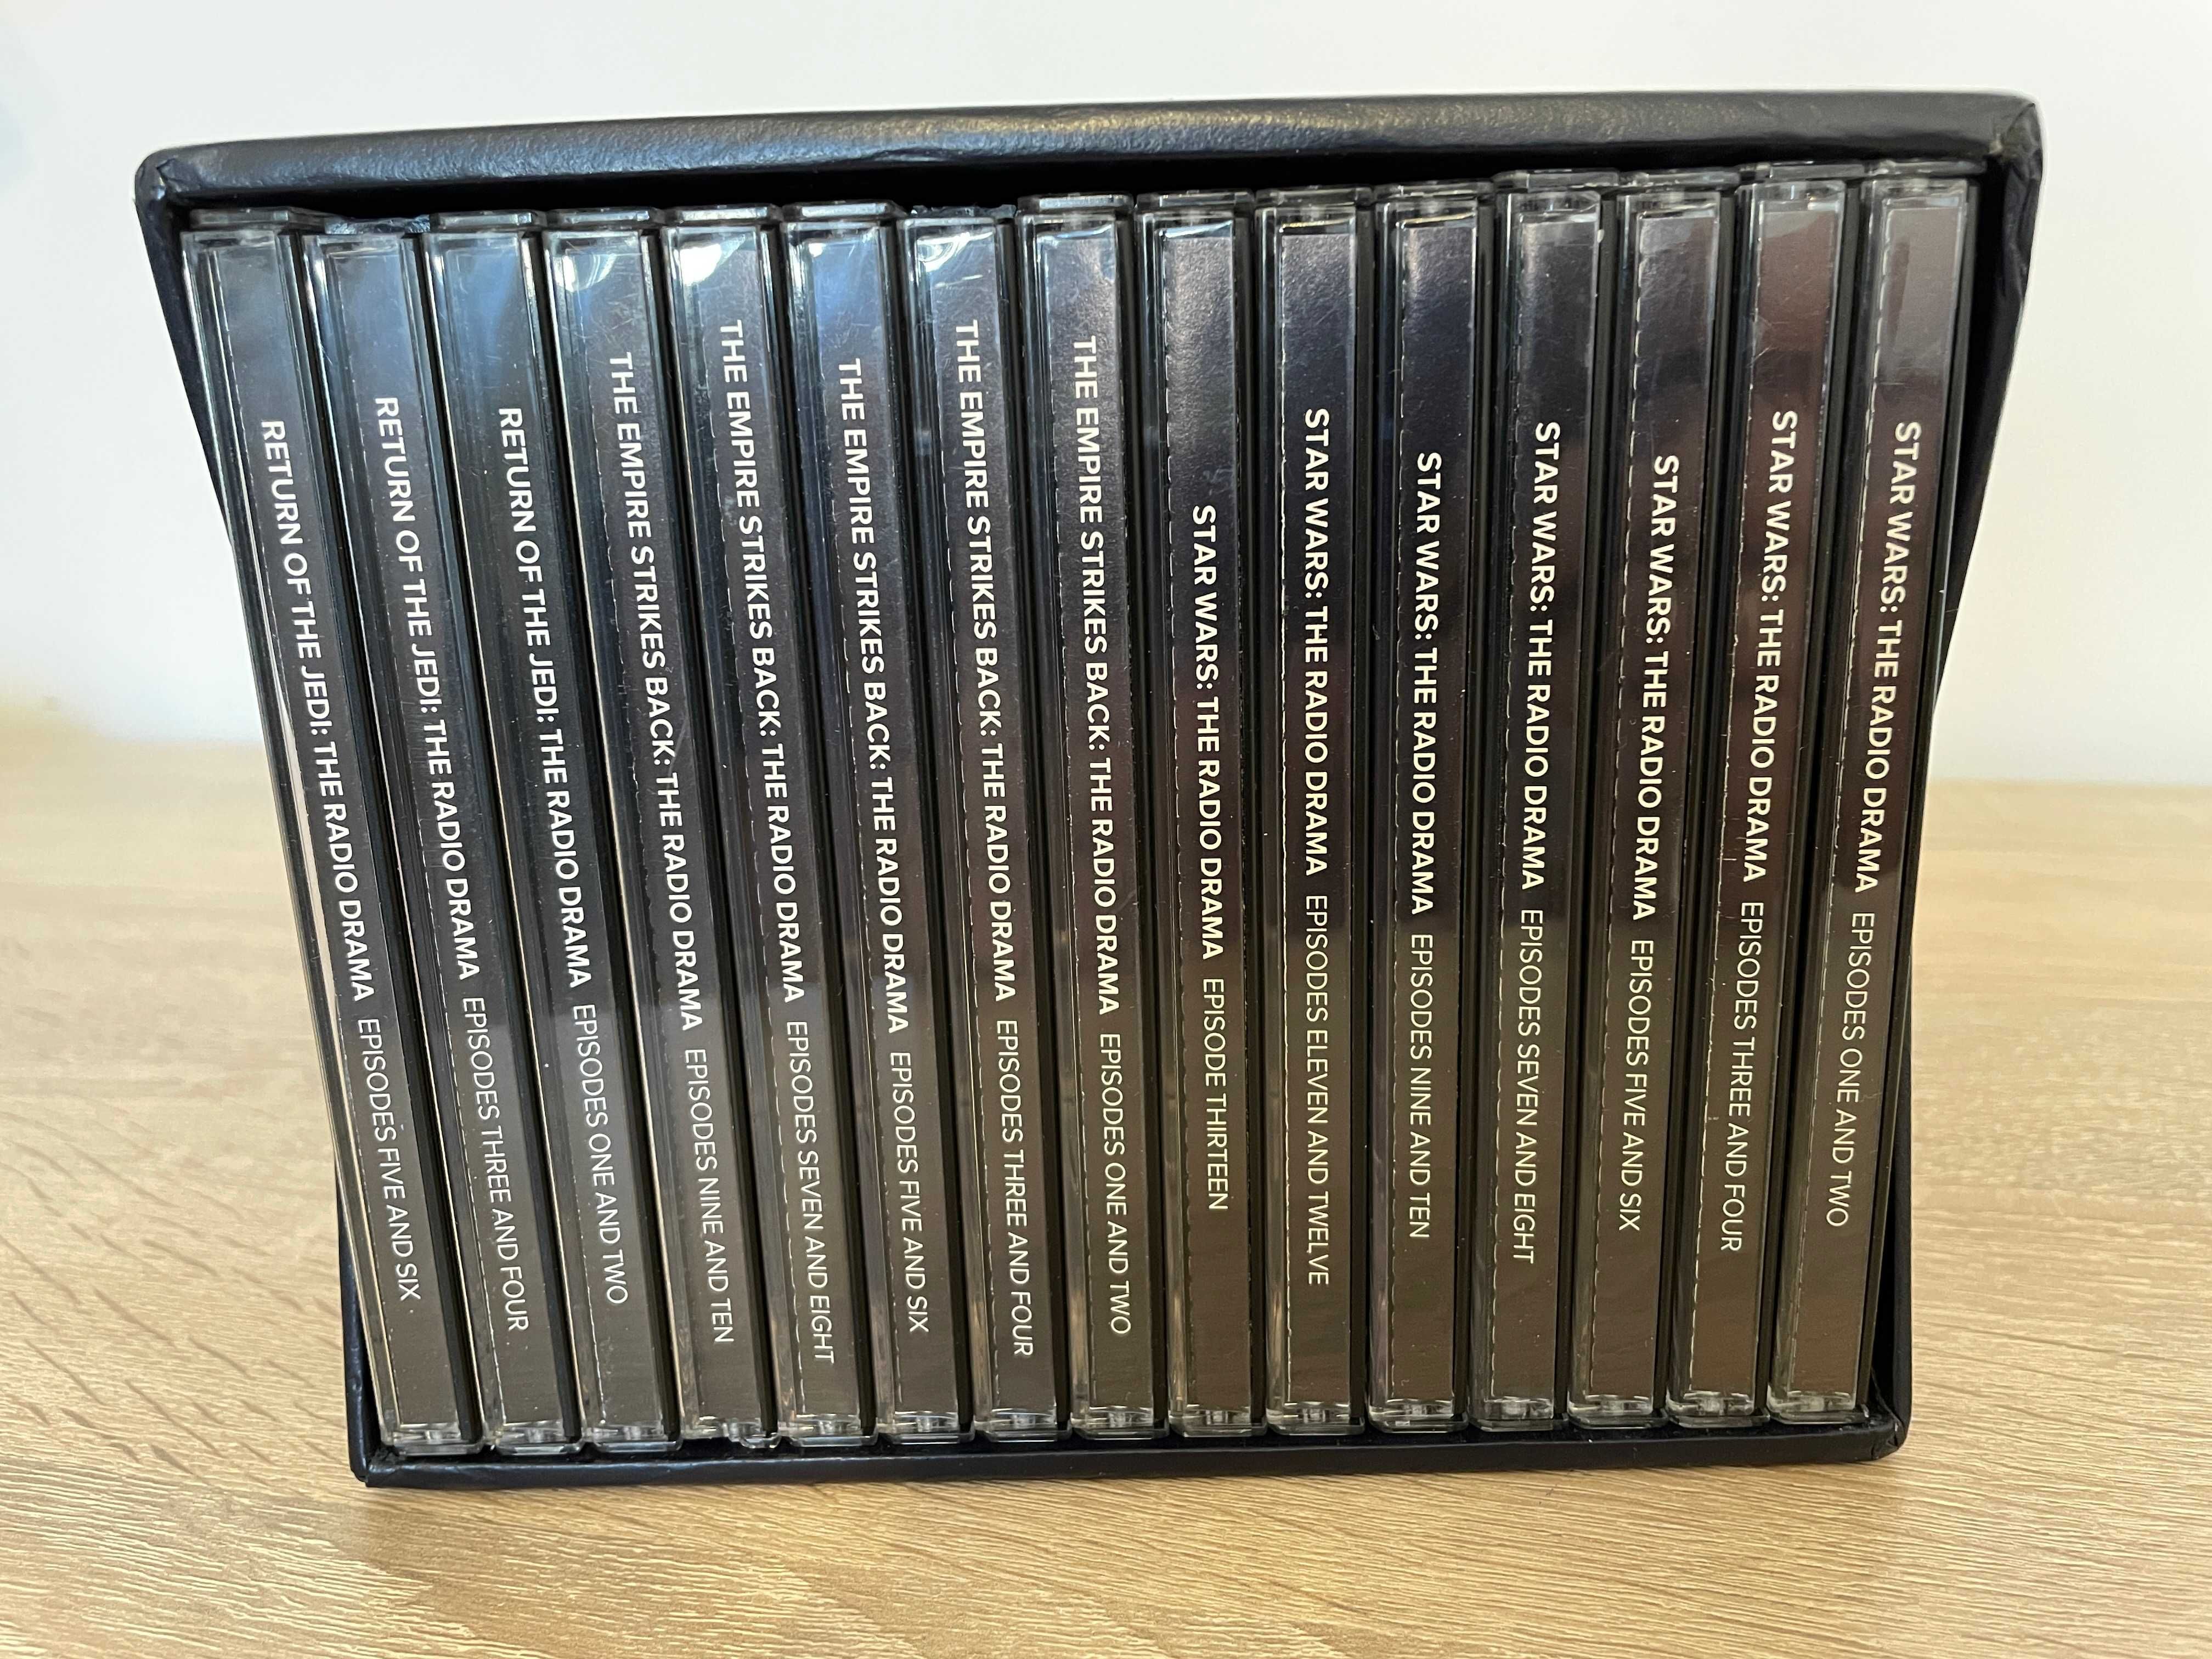 Star Wars - Original Radio Drama 15 CD, The Complete Star Wars Trilogy